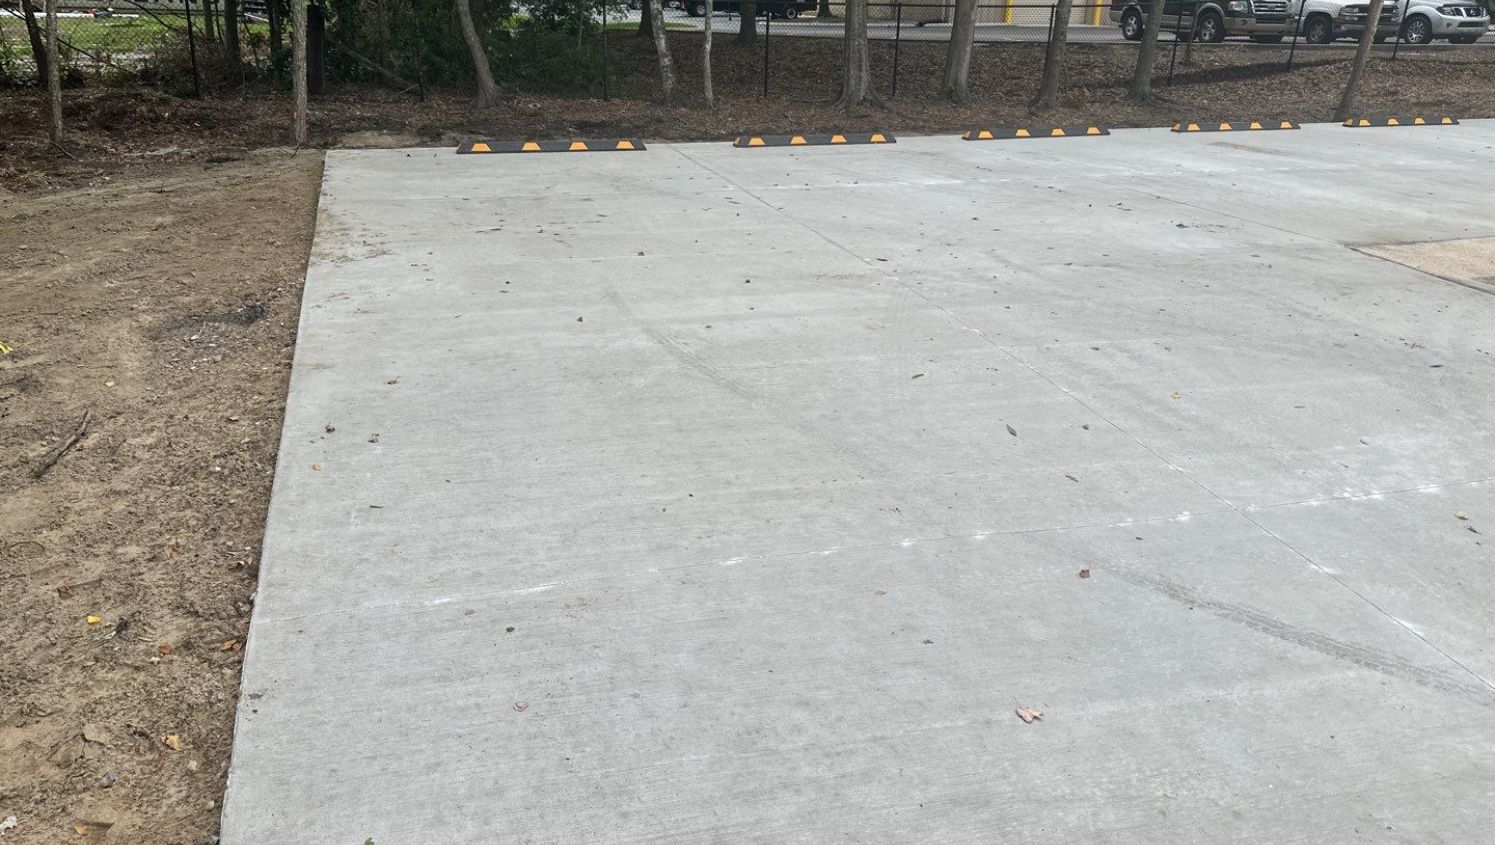 a concrete pad with no parking lines